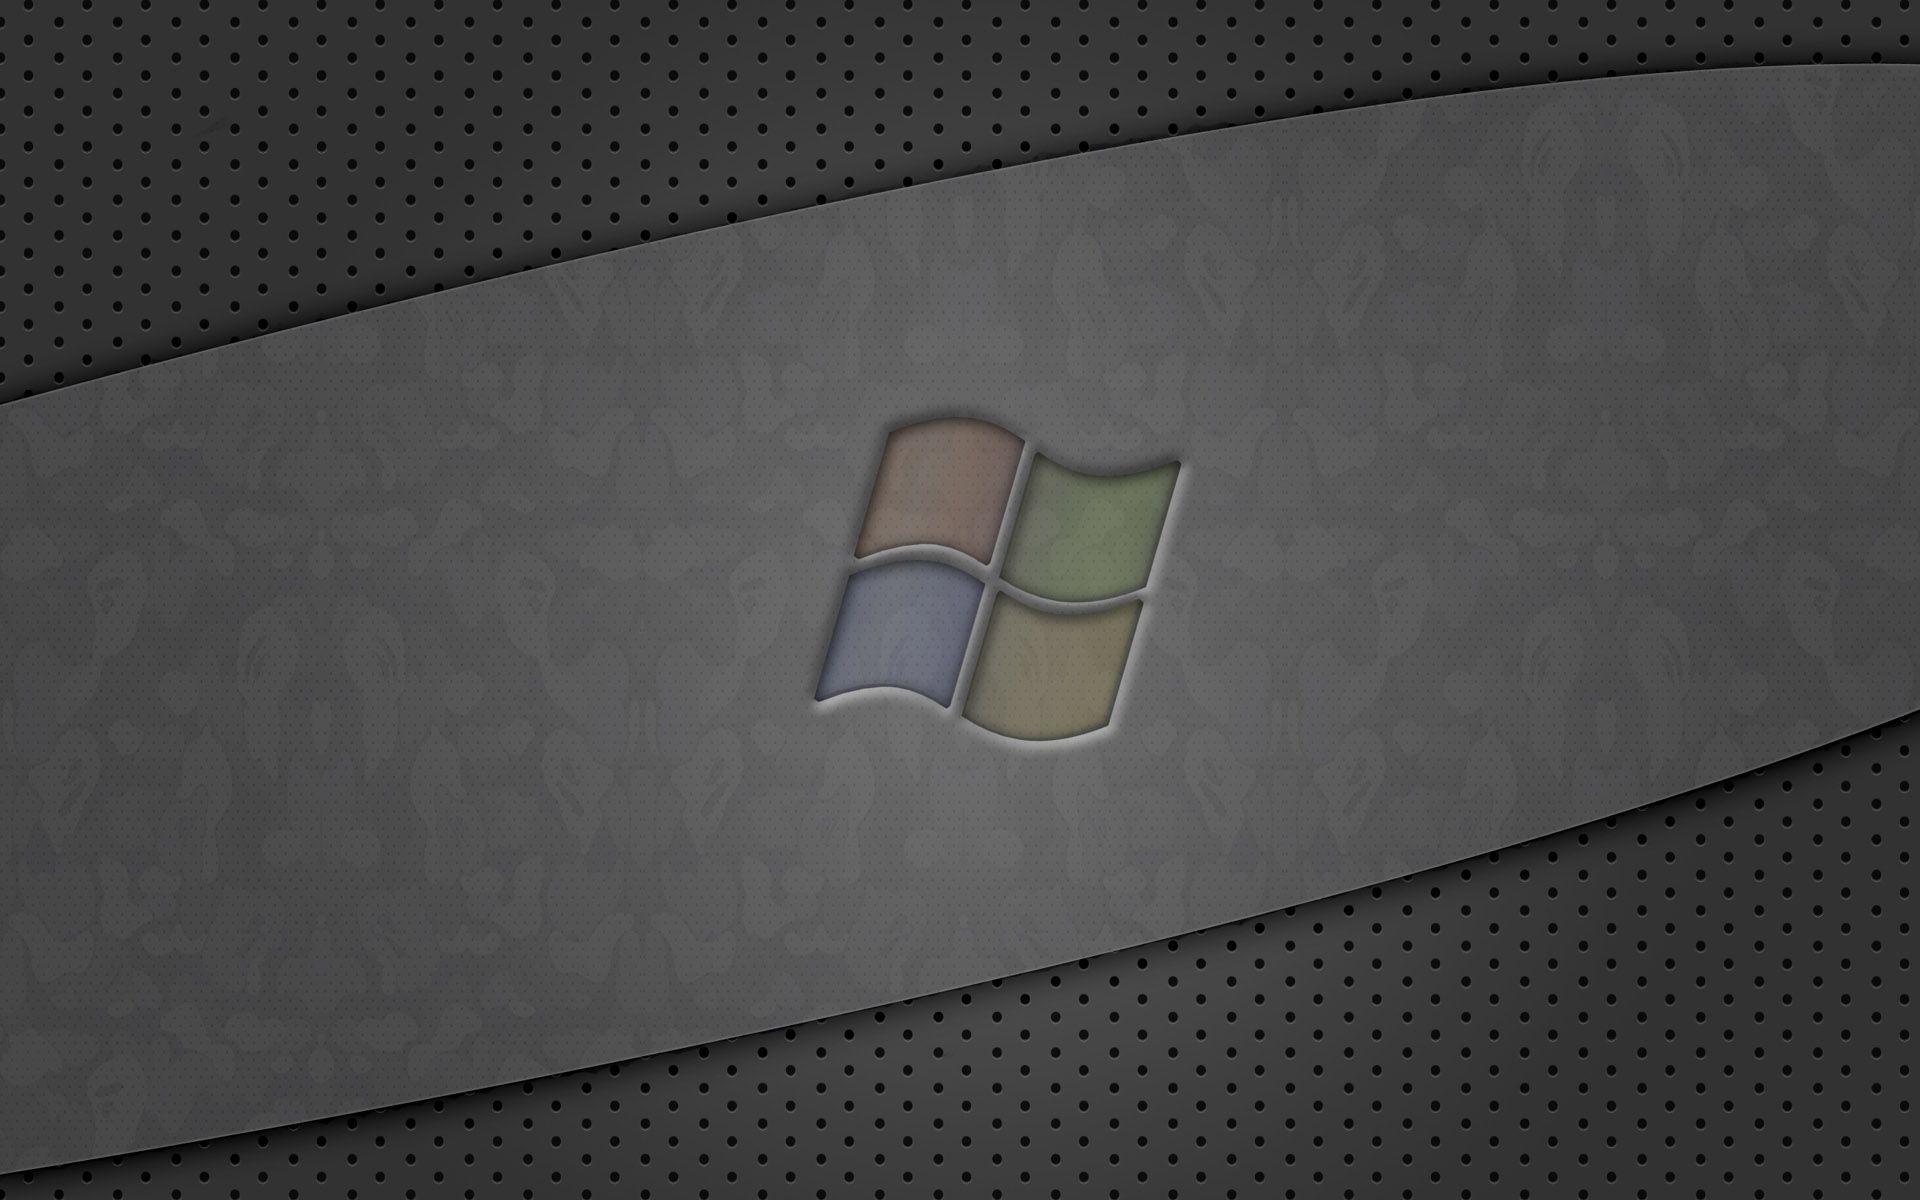 Windows Logo Wallpapers - Wallpaper Cave